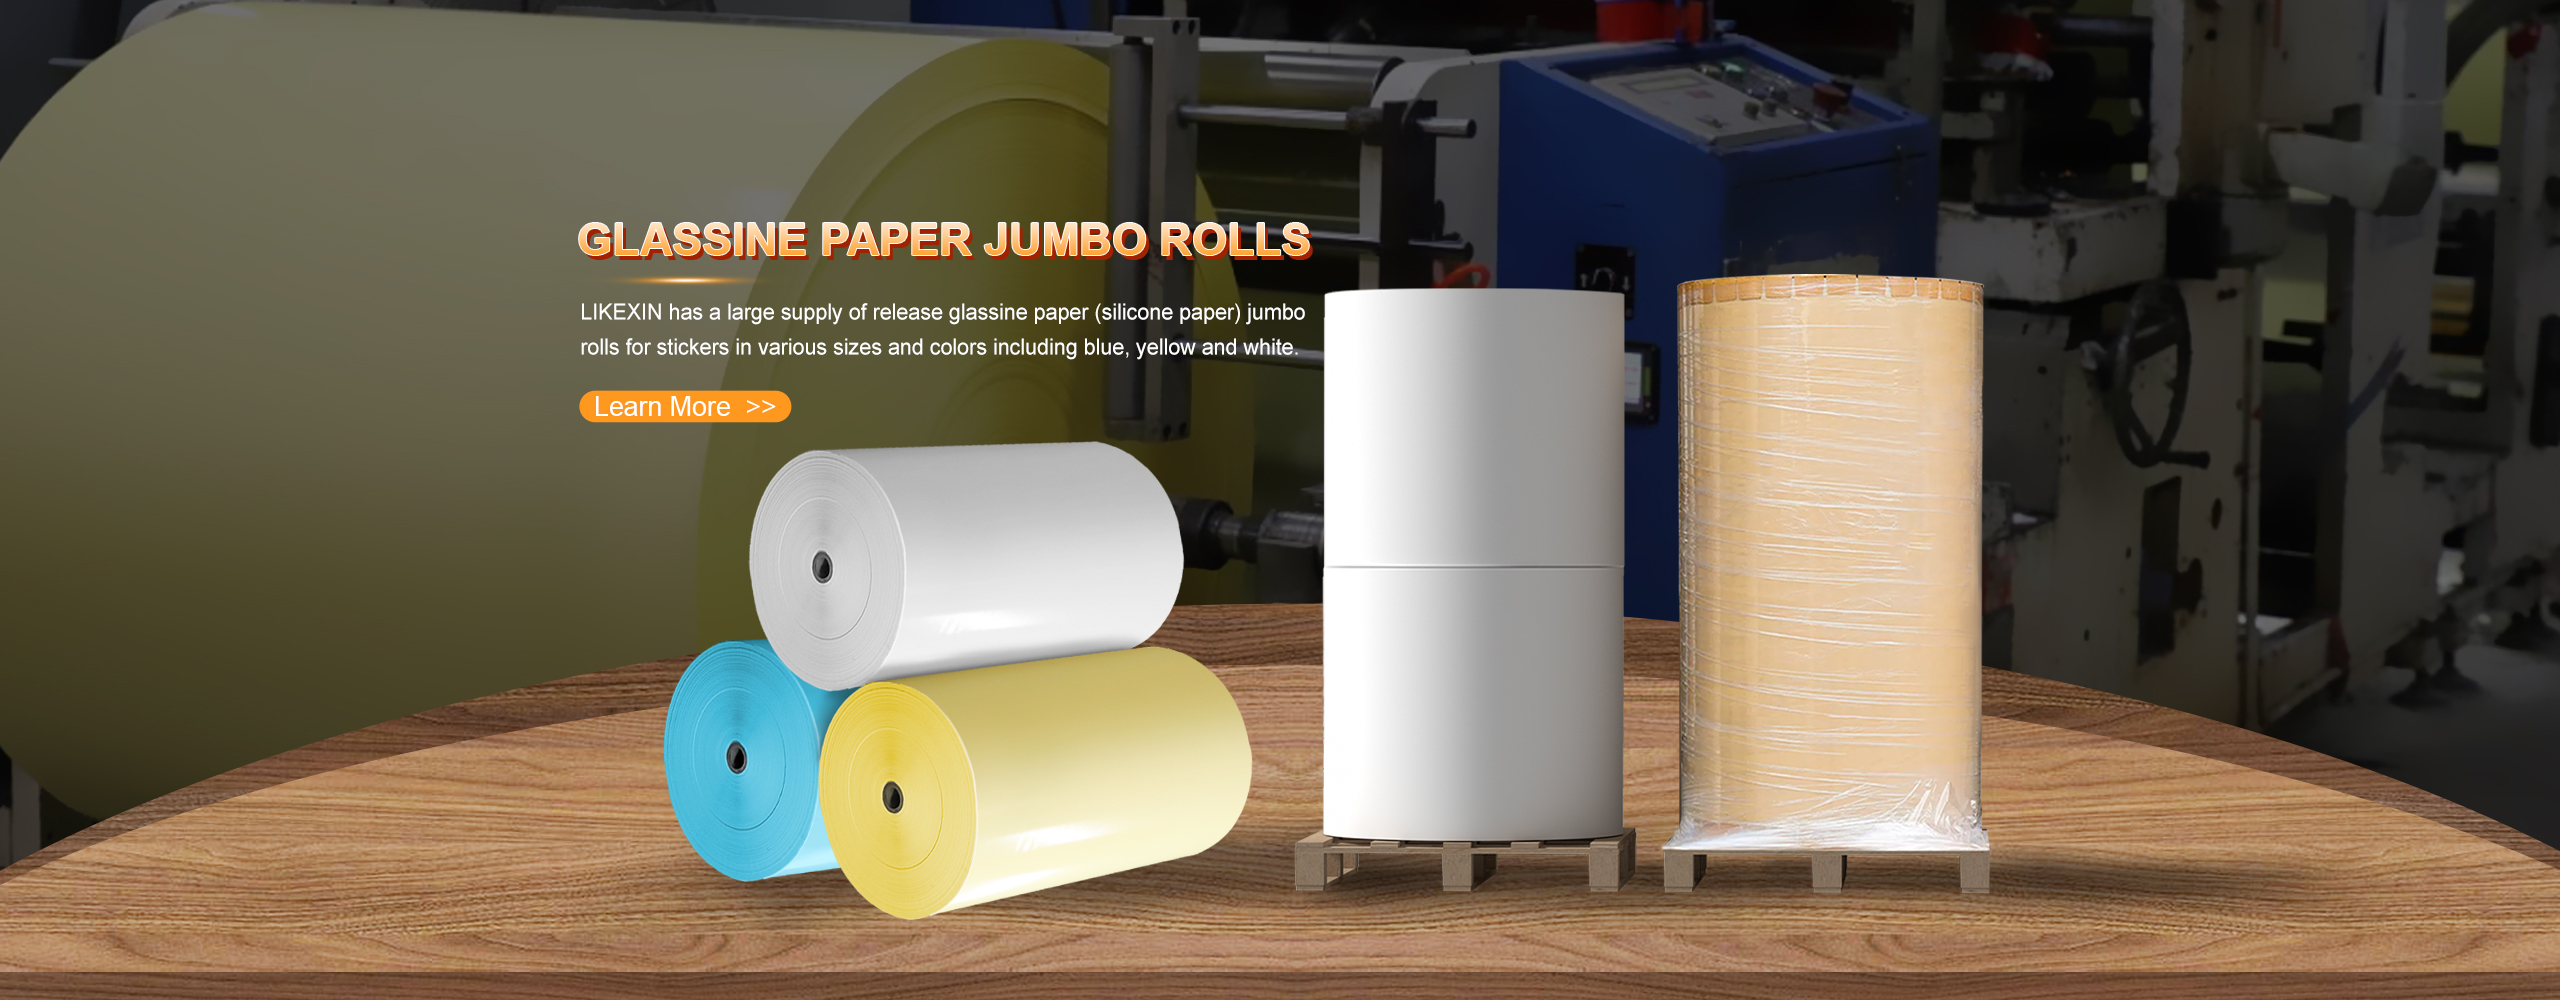 Glassine Paper Jumbo Rolls